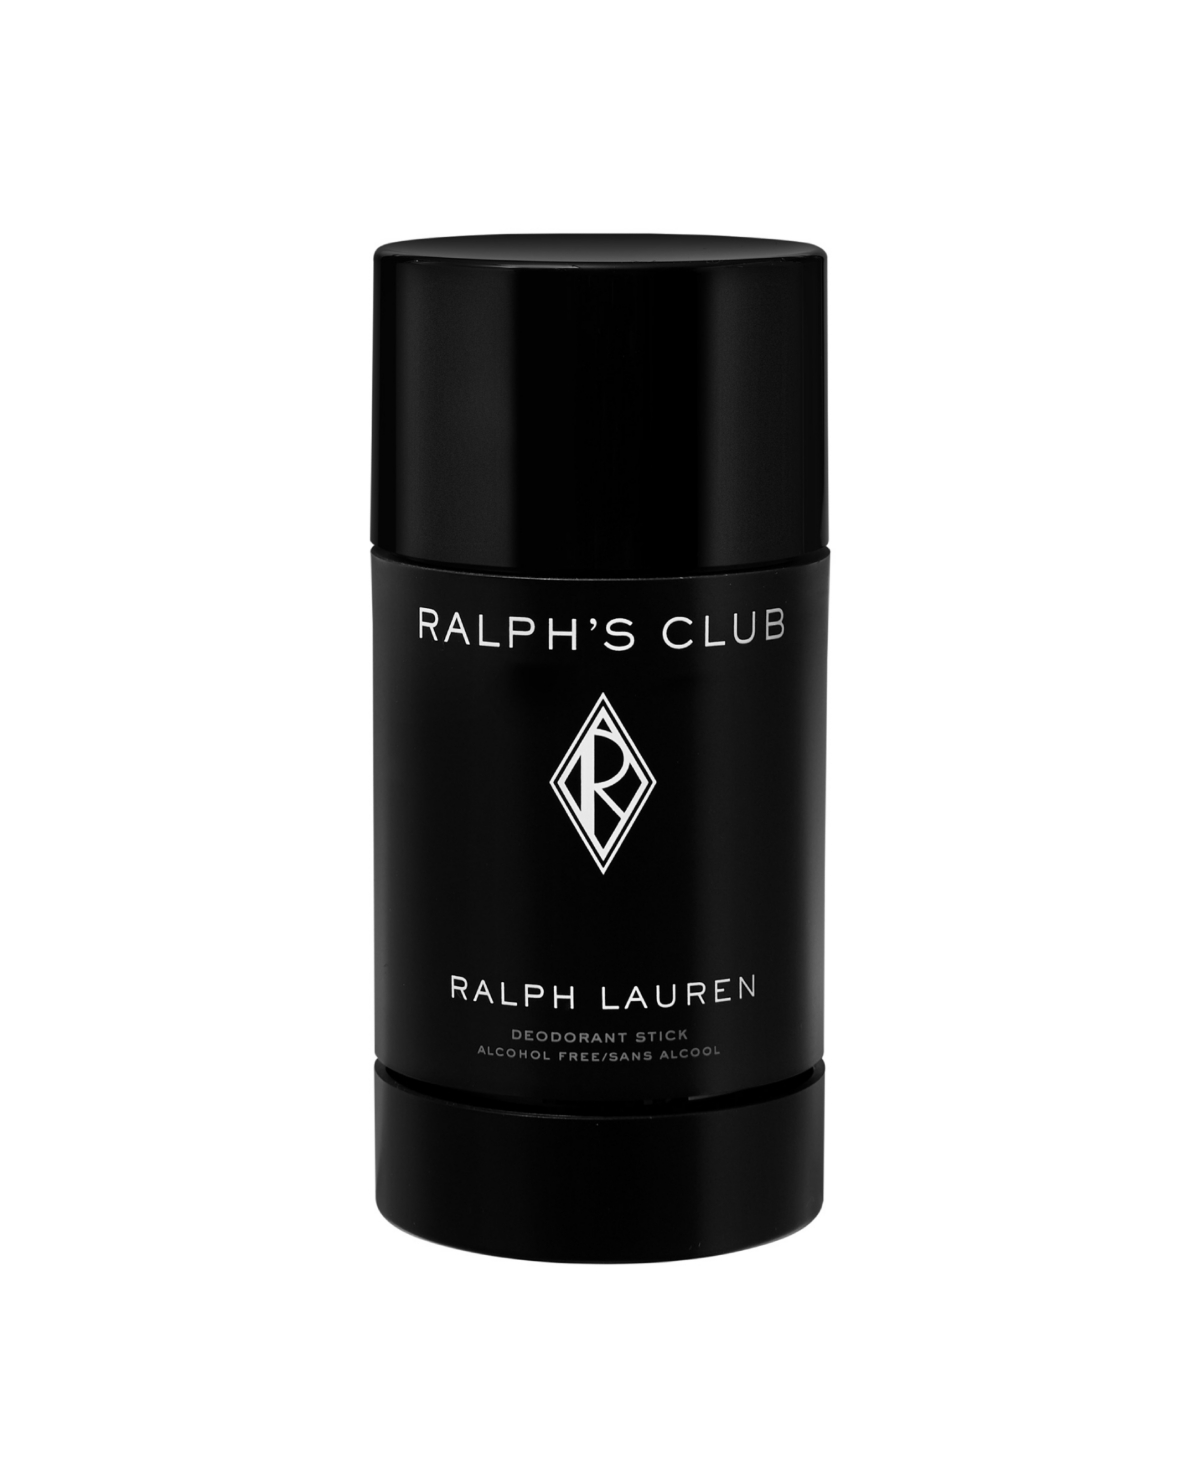 Ralph Lauren Ralph's Club Deodorant Stick, 2.5 Oz. In No Color